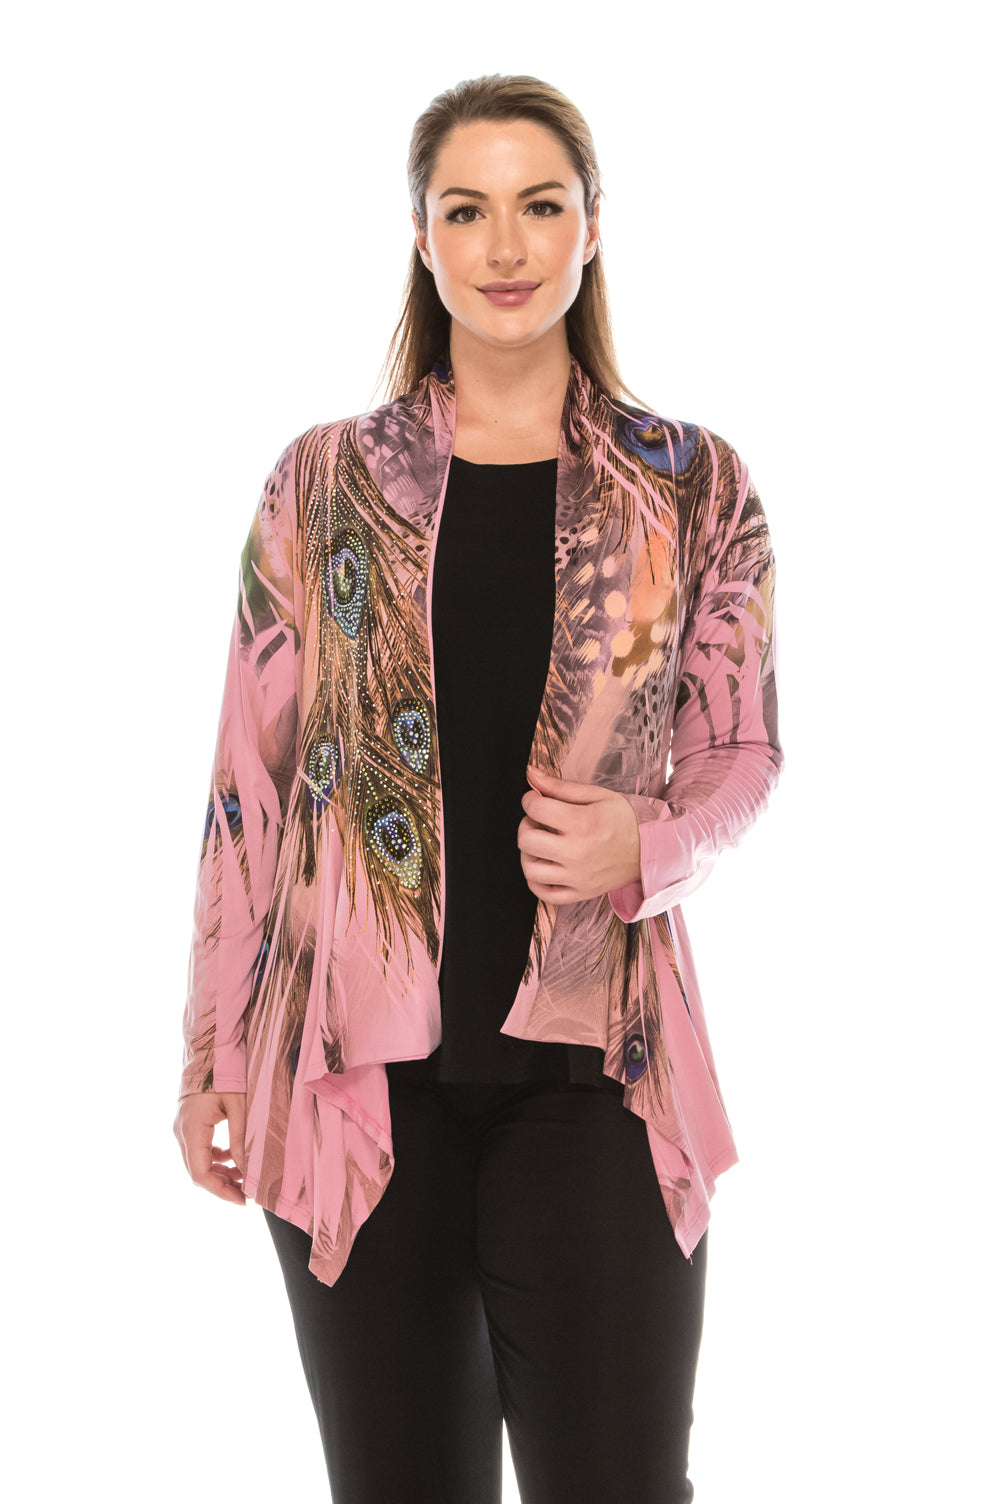 Jostar Women's  Mid-cut Jacket Long Sleeve Sublimation Rhinestones, 428HT-LU-R-U052 - Jostar Online